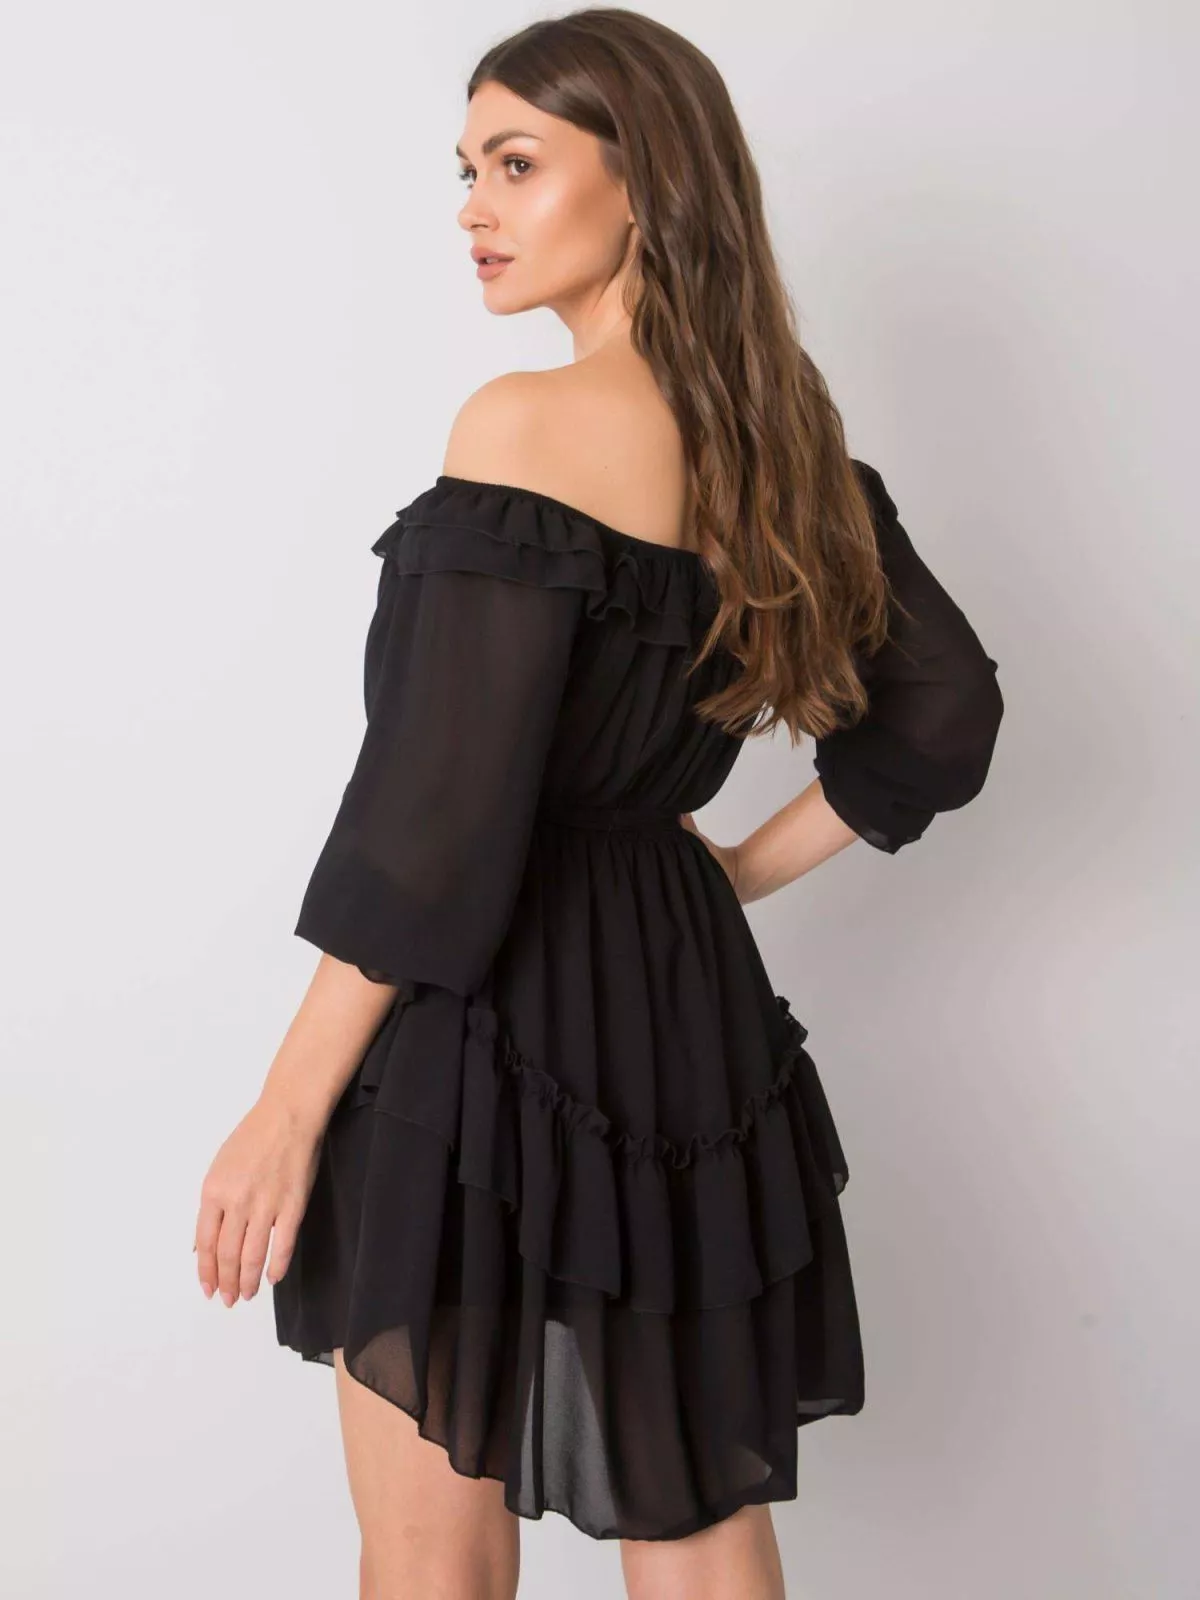 Rochie de zi stil spaniol negru - rochii de zi